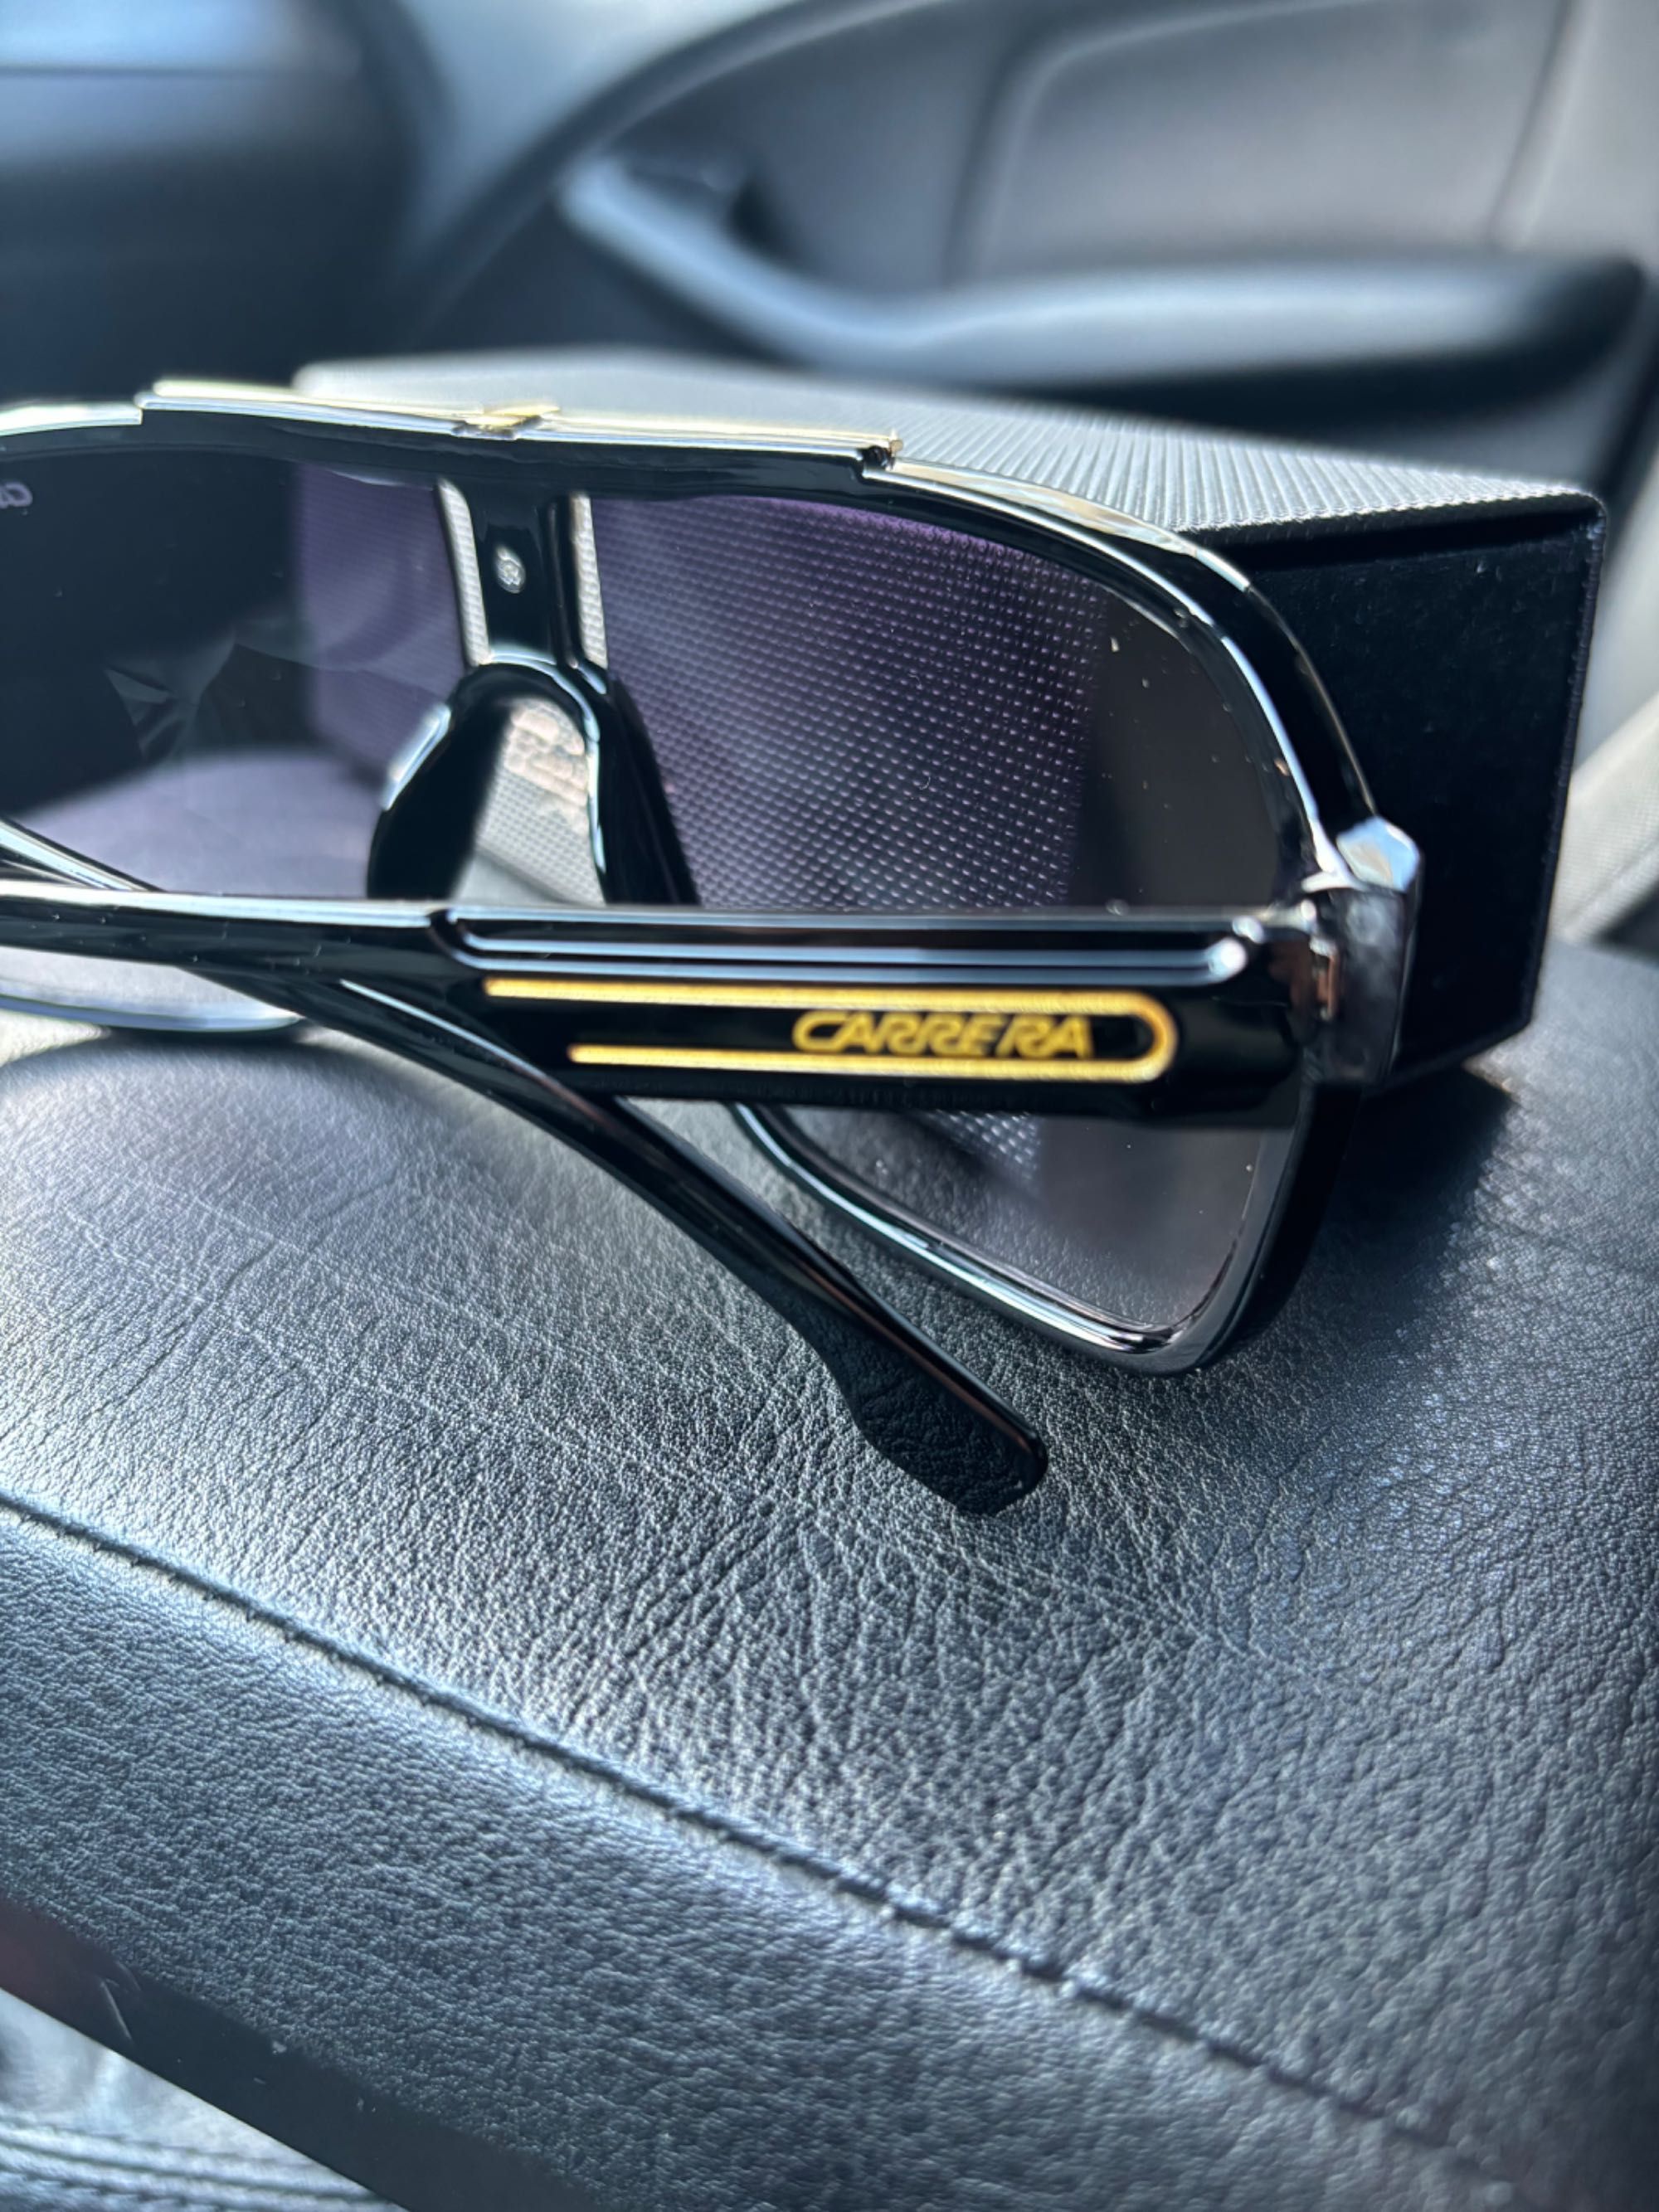 Carrera Слънчеви очила